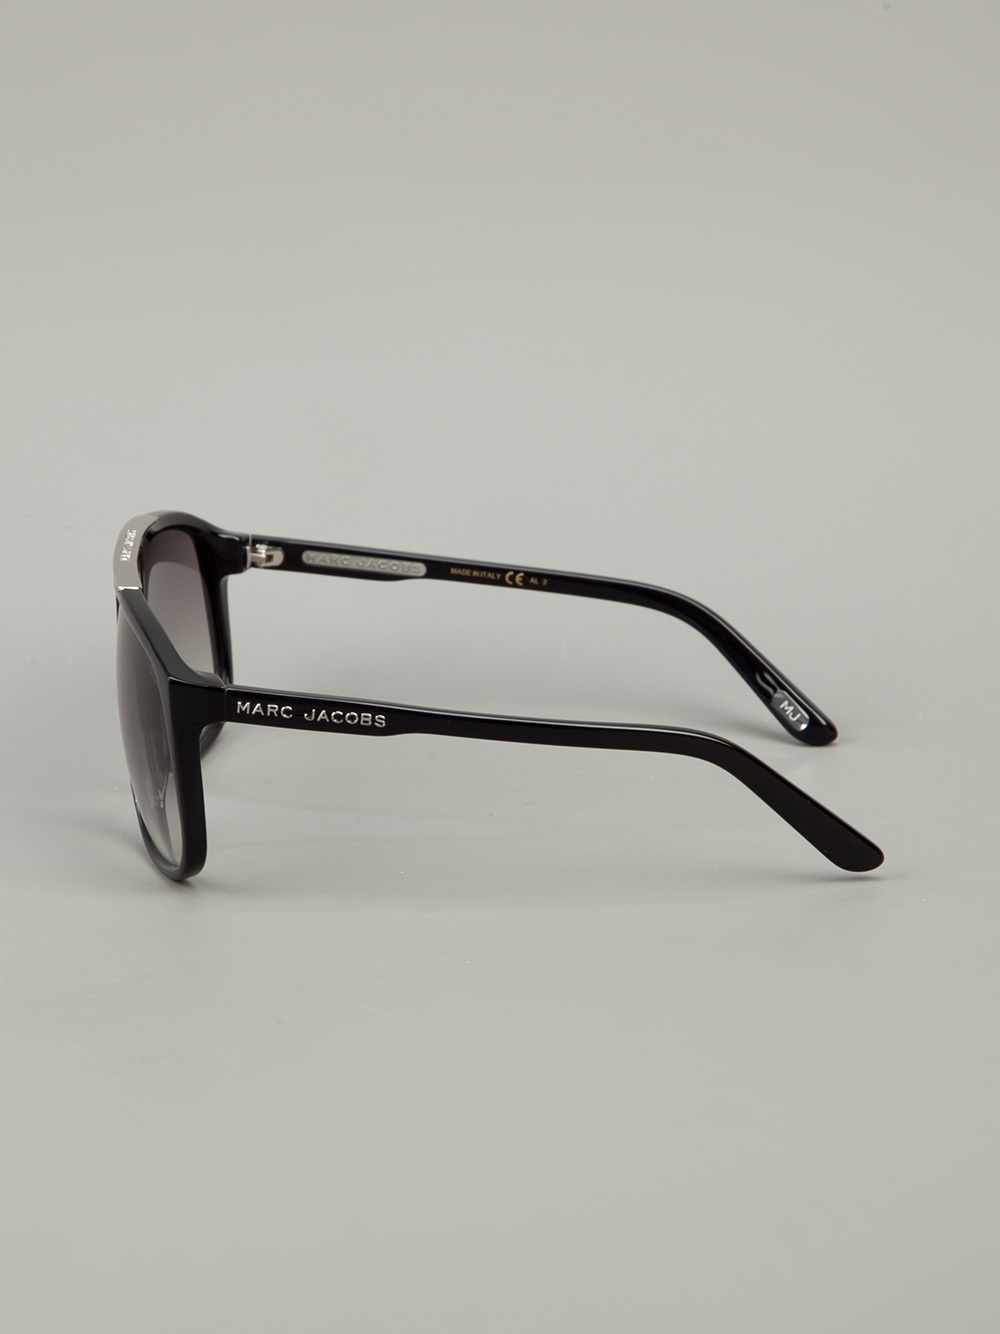 Marc Jacobs Sunglasses in Black for Men - Lyst